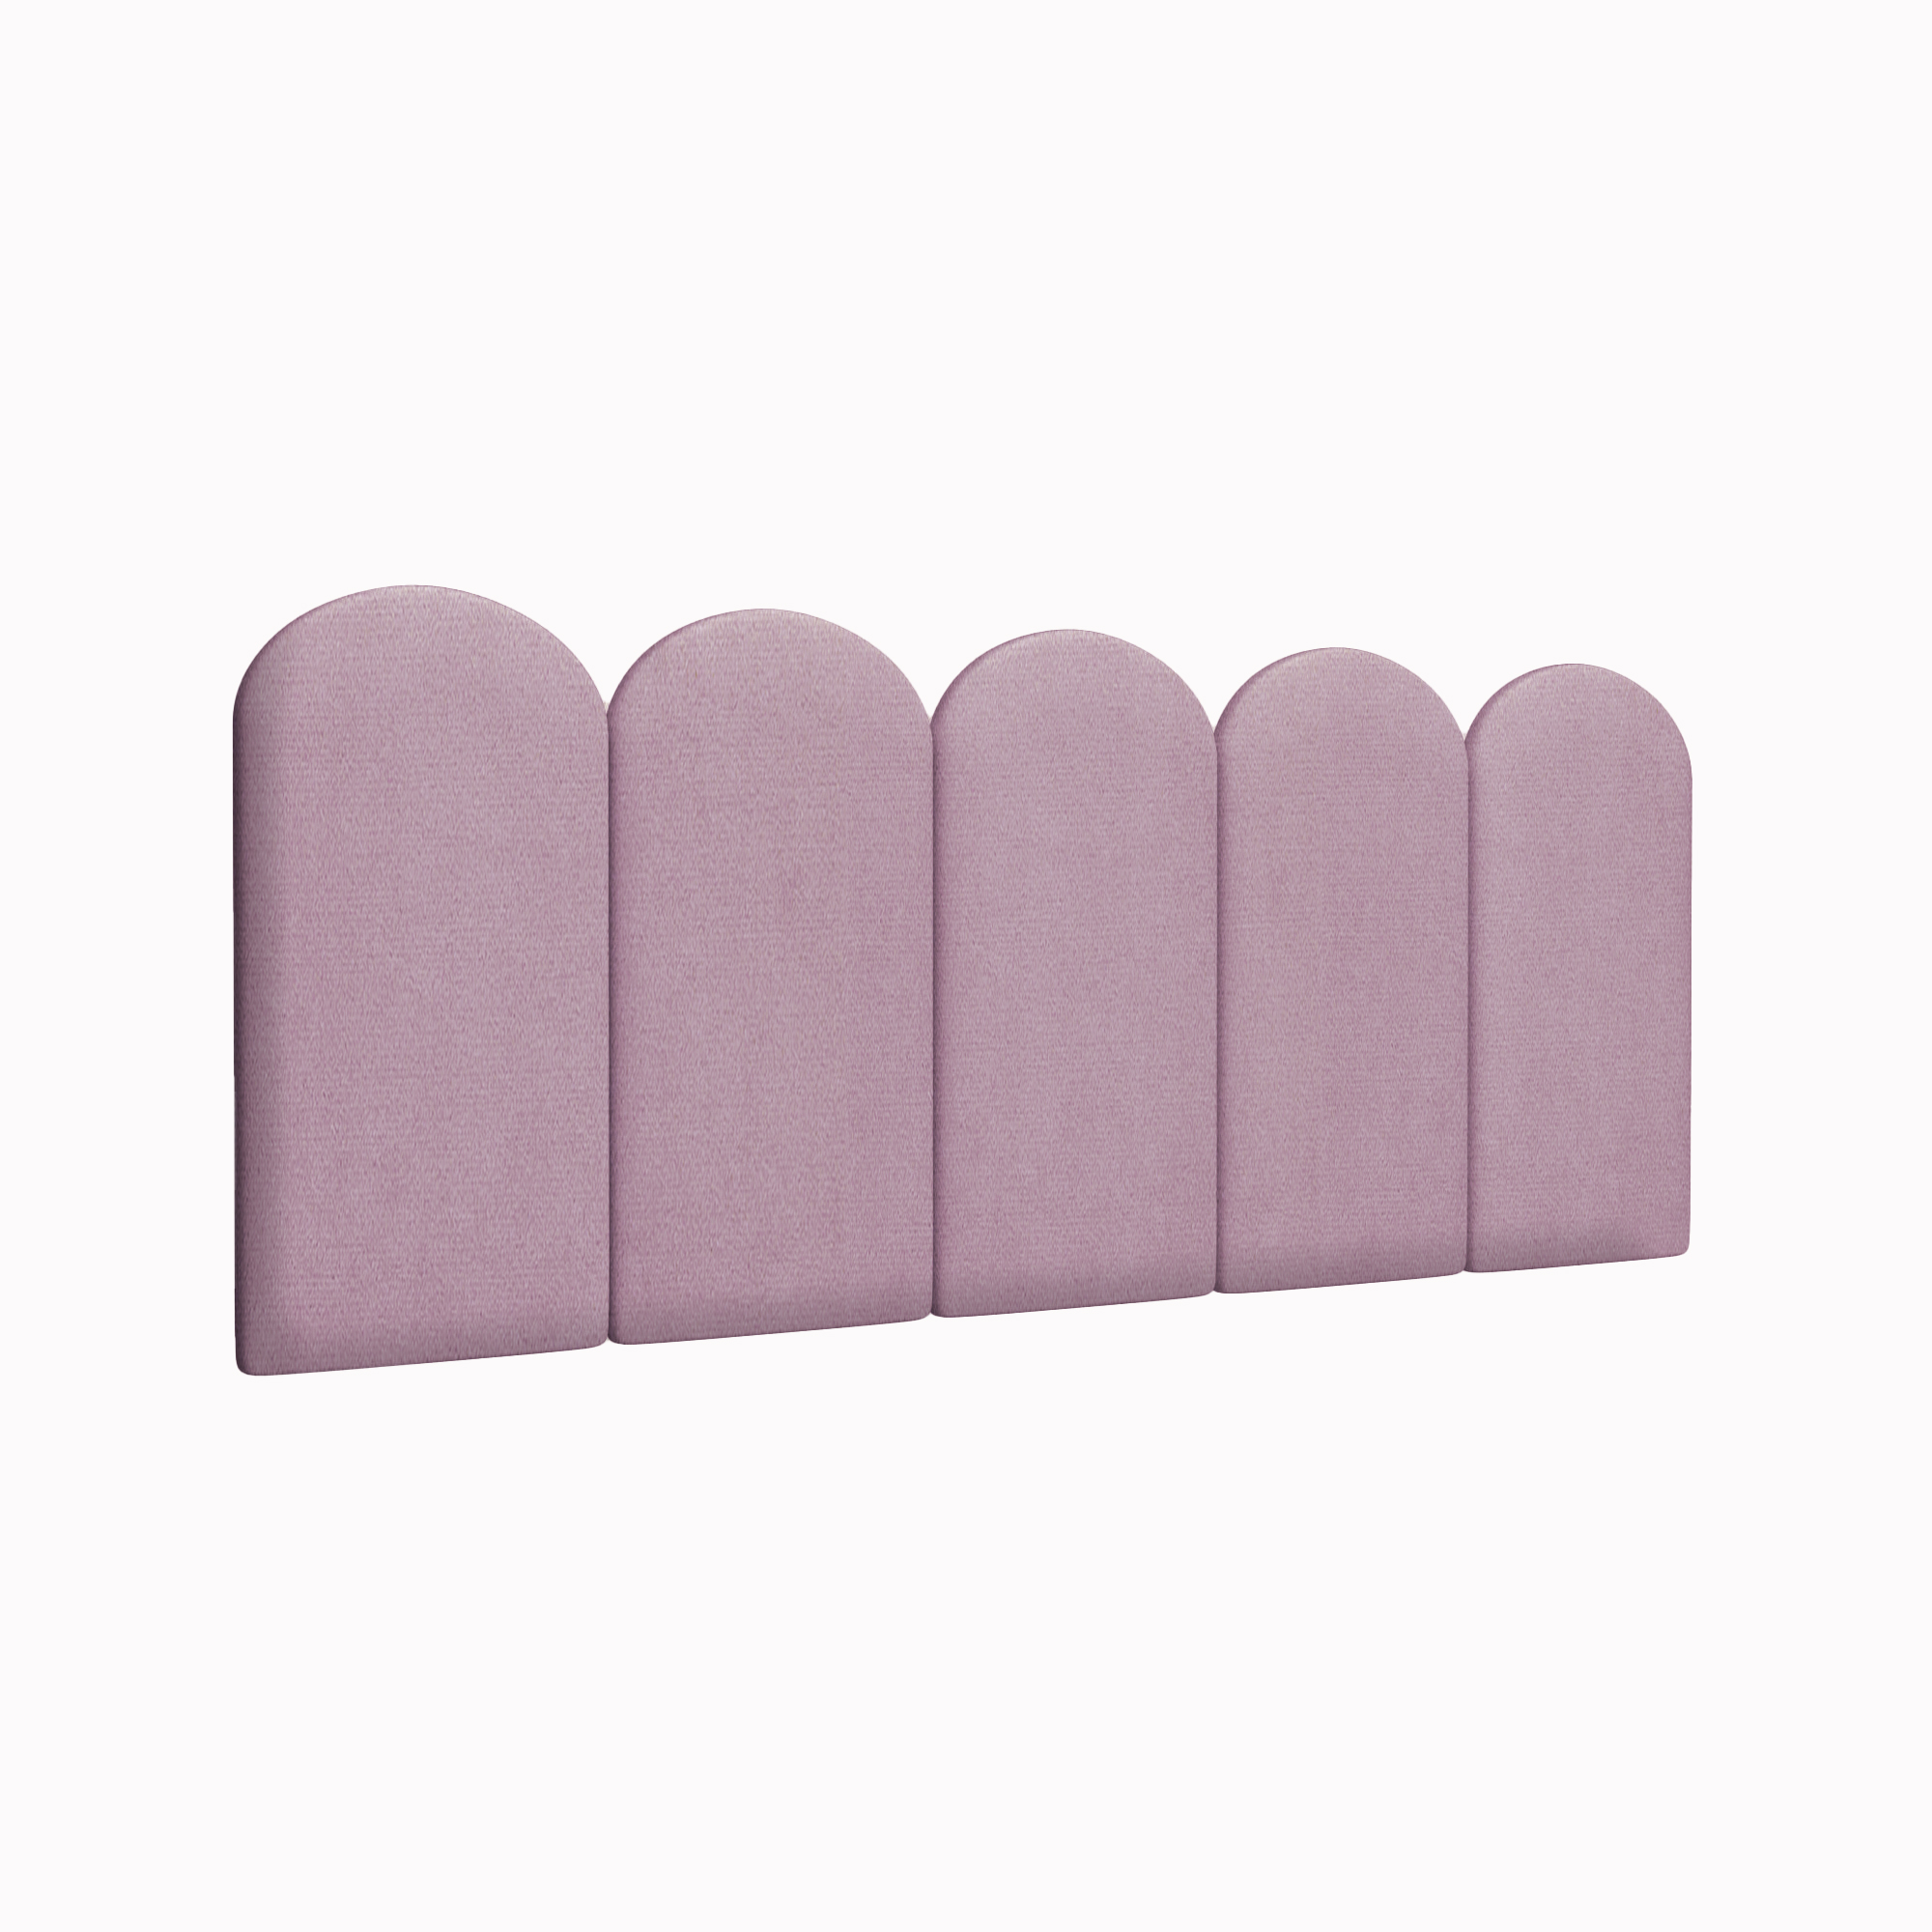 Мягкие стены детской Velour Pink 30х60R см 4 шт.